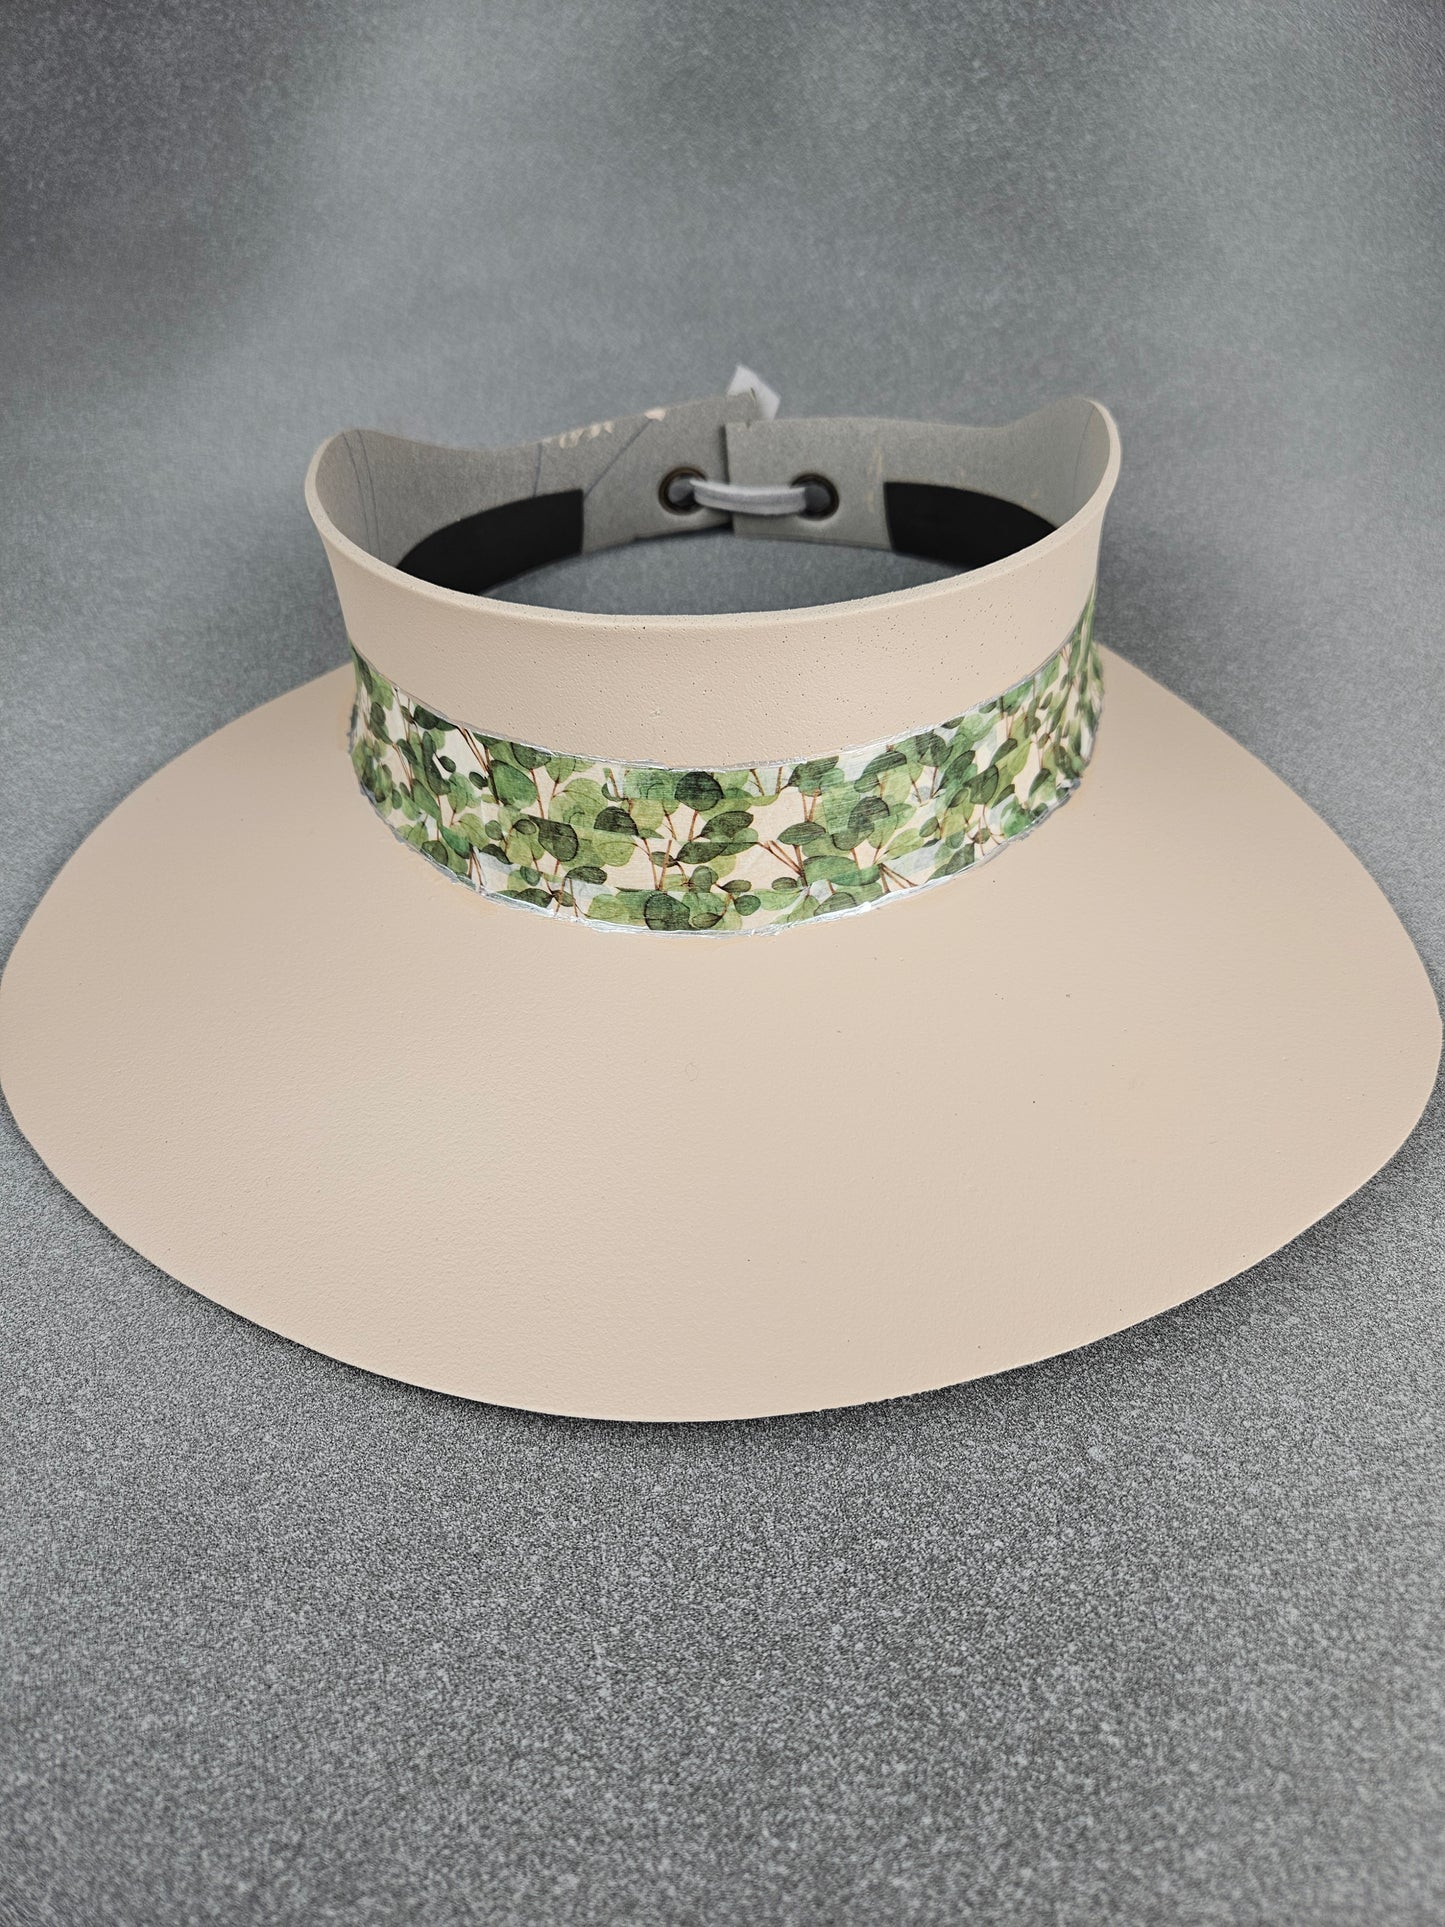 Peachy Beige Audrey Sun Visor Hat with Green Botanical Leafy Band: UV Resistant, Walks, Brunch, Golf, Wedding, Church, No Headache, 1950s, Pool, Beach, Big Brim, Summer